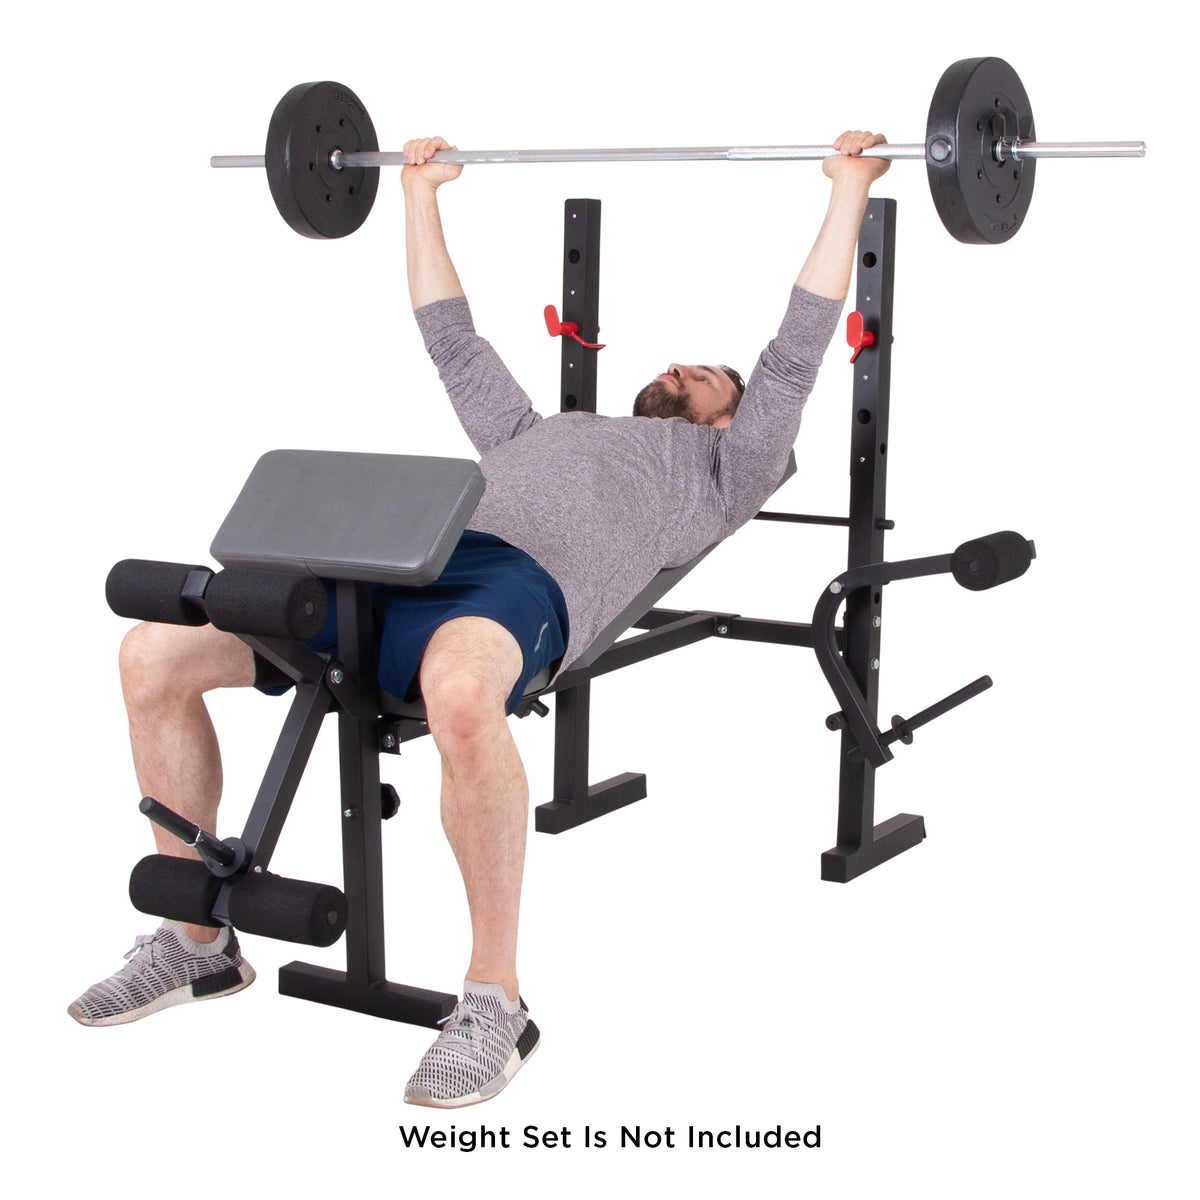 Body Power BUB350 Multi-Purpose Adjustable Fitness Weight Bench